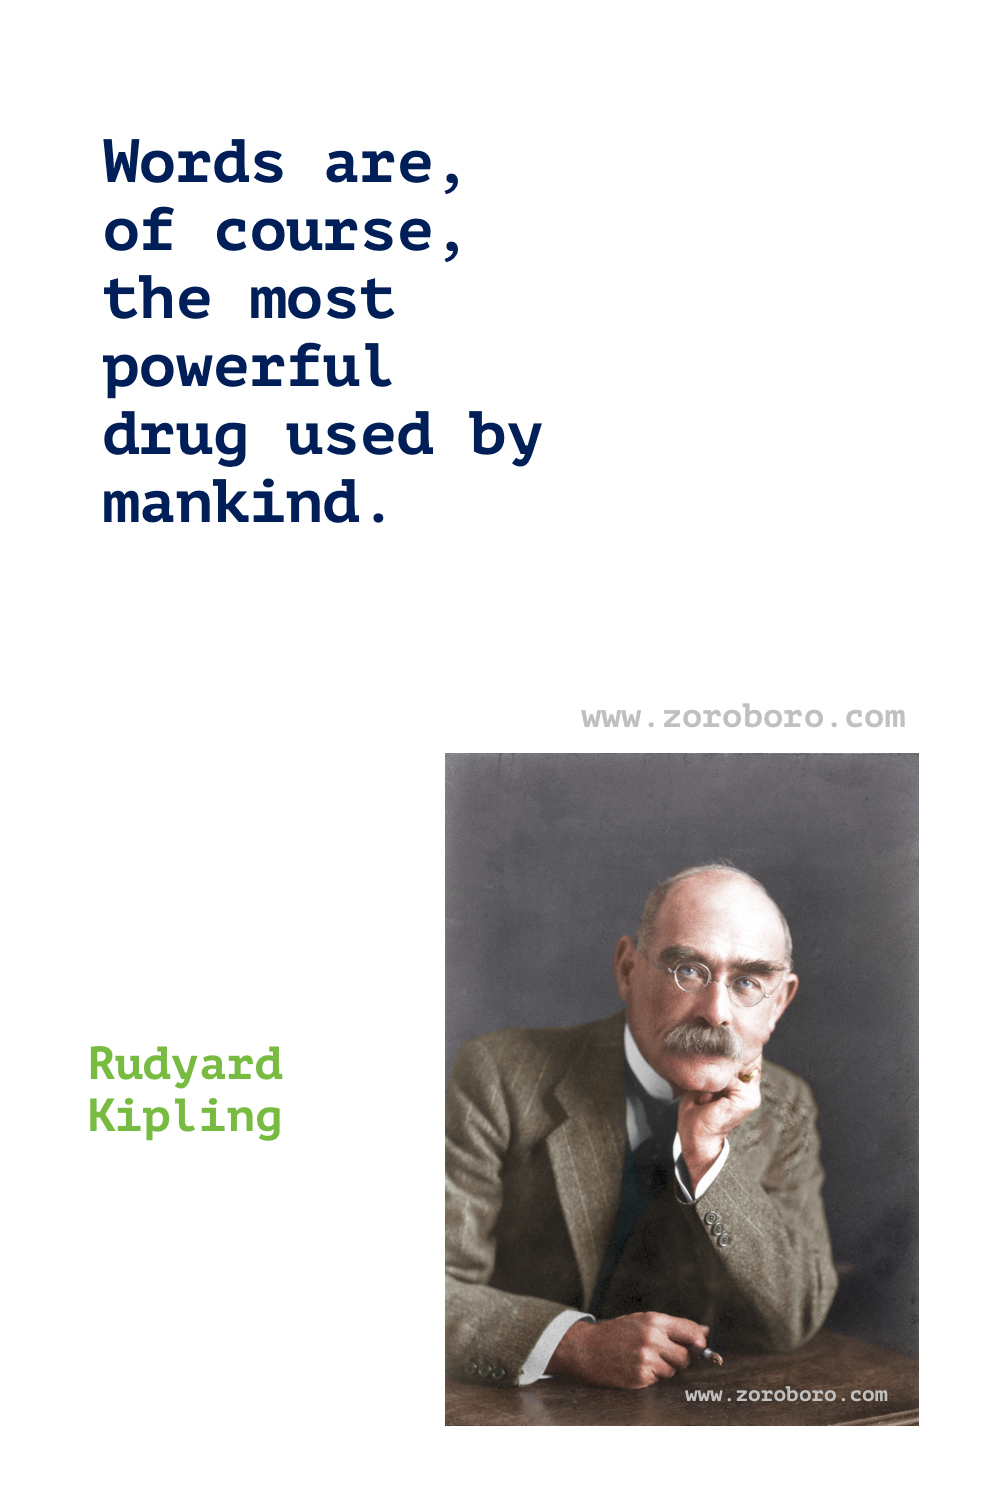 Rudyard Kipling Quotes. Rudyard Kipling Poems. Rudyard Kipling Poetry. Rudyard Kipling Books Quotes. Rudyard Kipling Short Poems, Jungle Book Quotes.